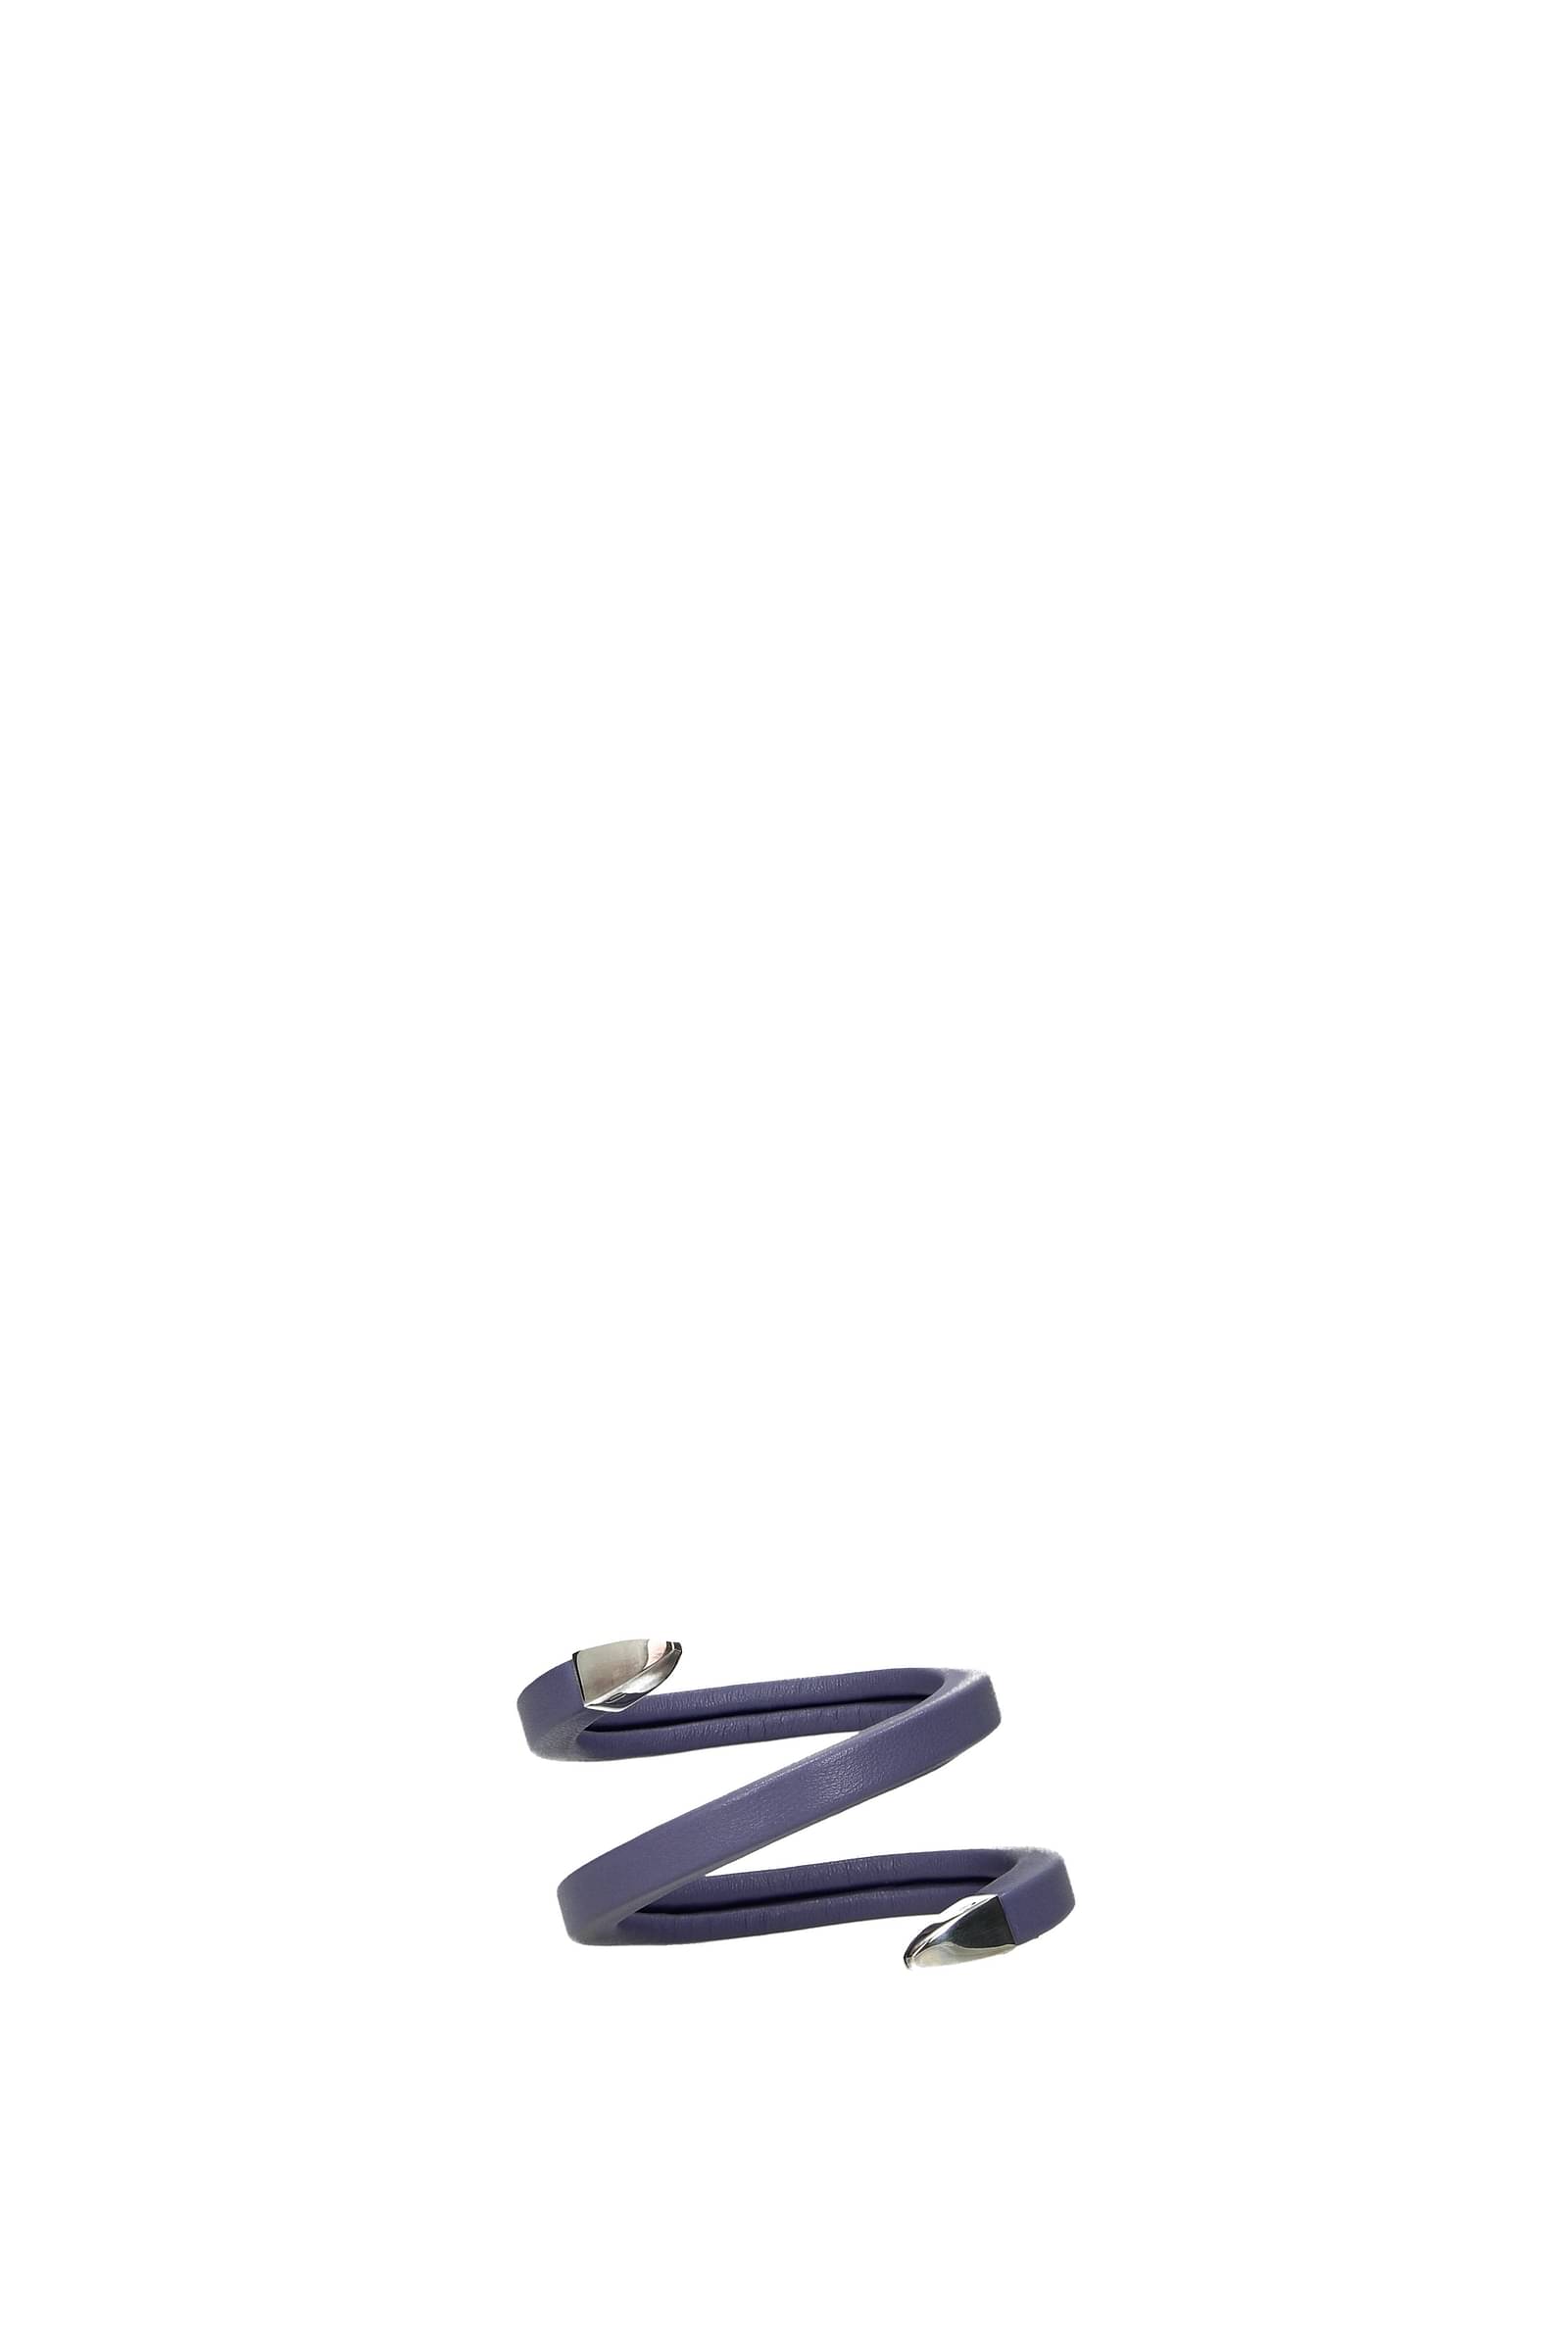 Bottega Veneta Black Leather Intrecciato Knot Bracelet Bottega Veneta | TLC